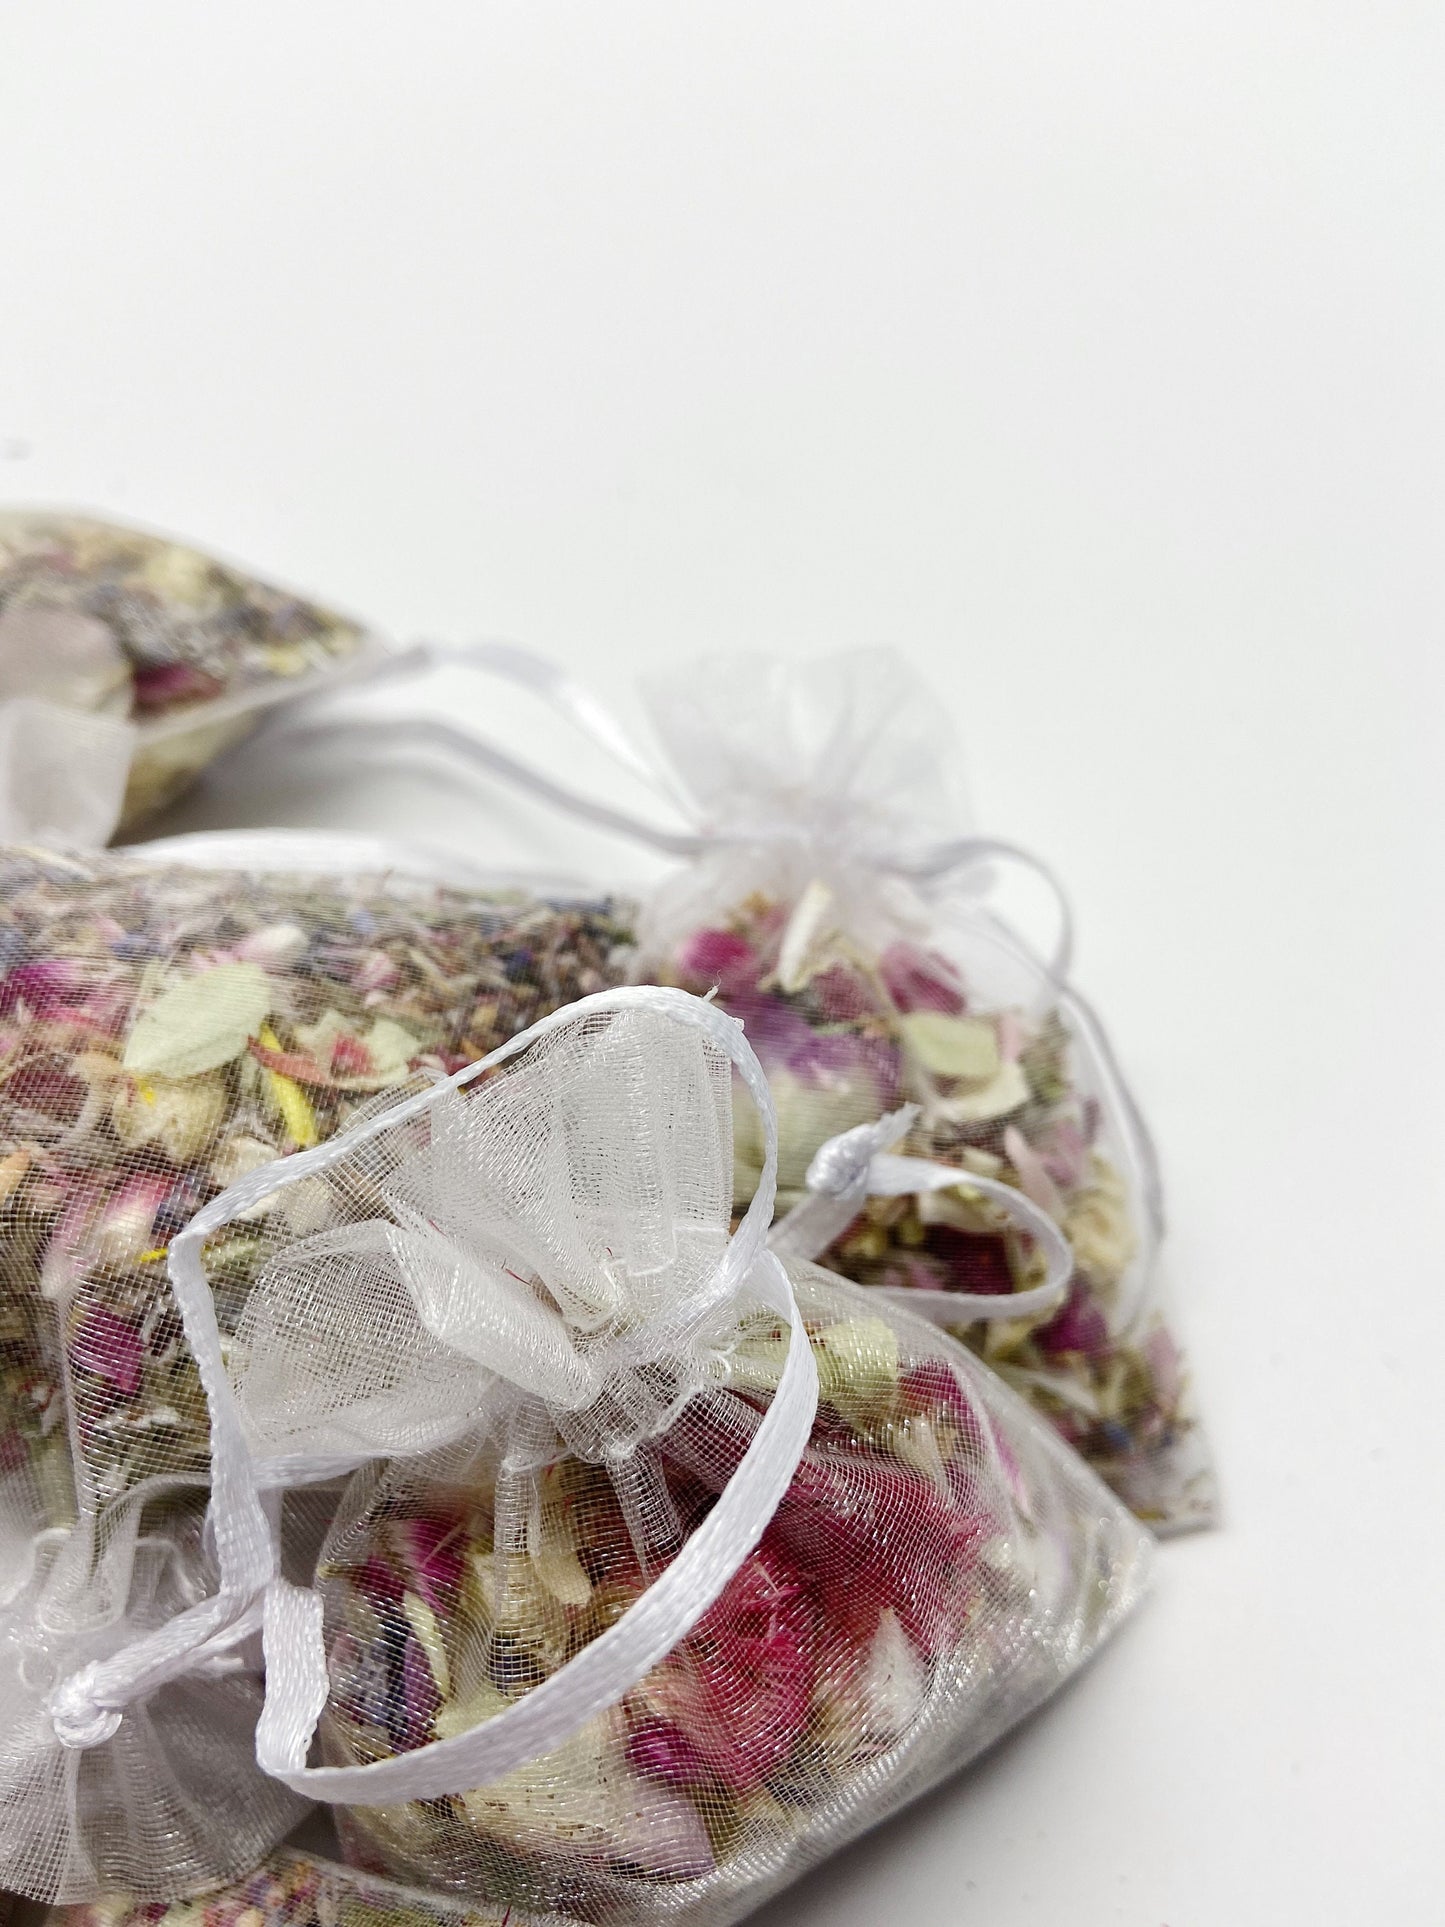 Confetti Bags, Dried Flowers Bags, Flower Confetti, Sachets, Dried Flowers, Preserved Flowers, Wedding Favor, Party Favor